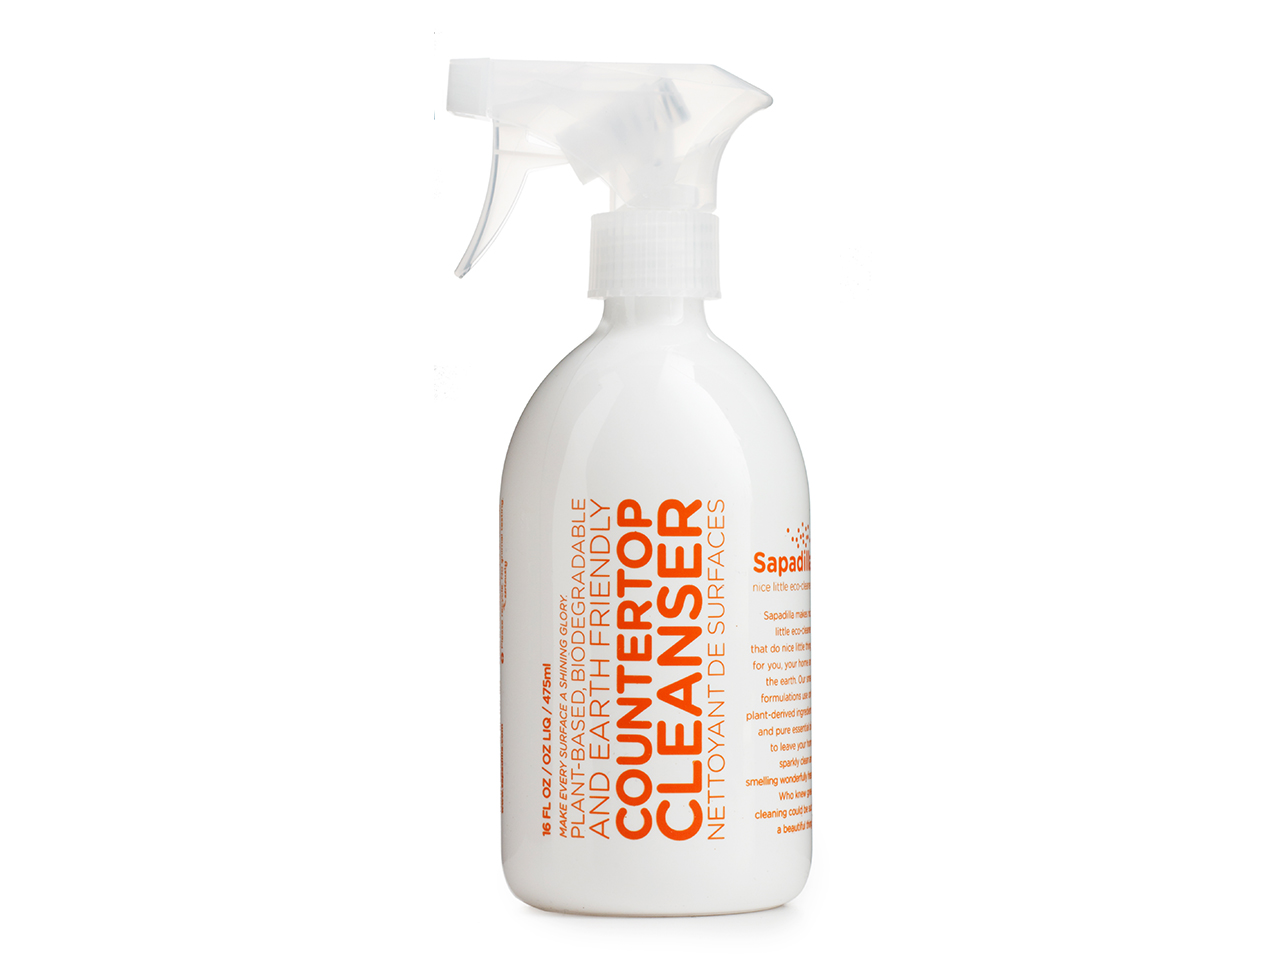 Eco-friendly cleaning products, white Sapadilla spray bottle